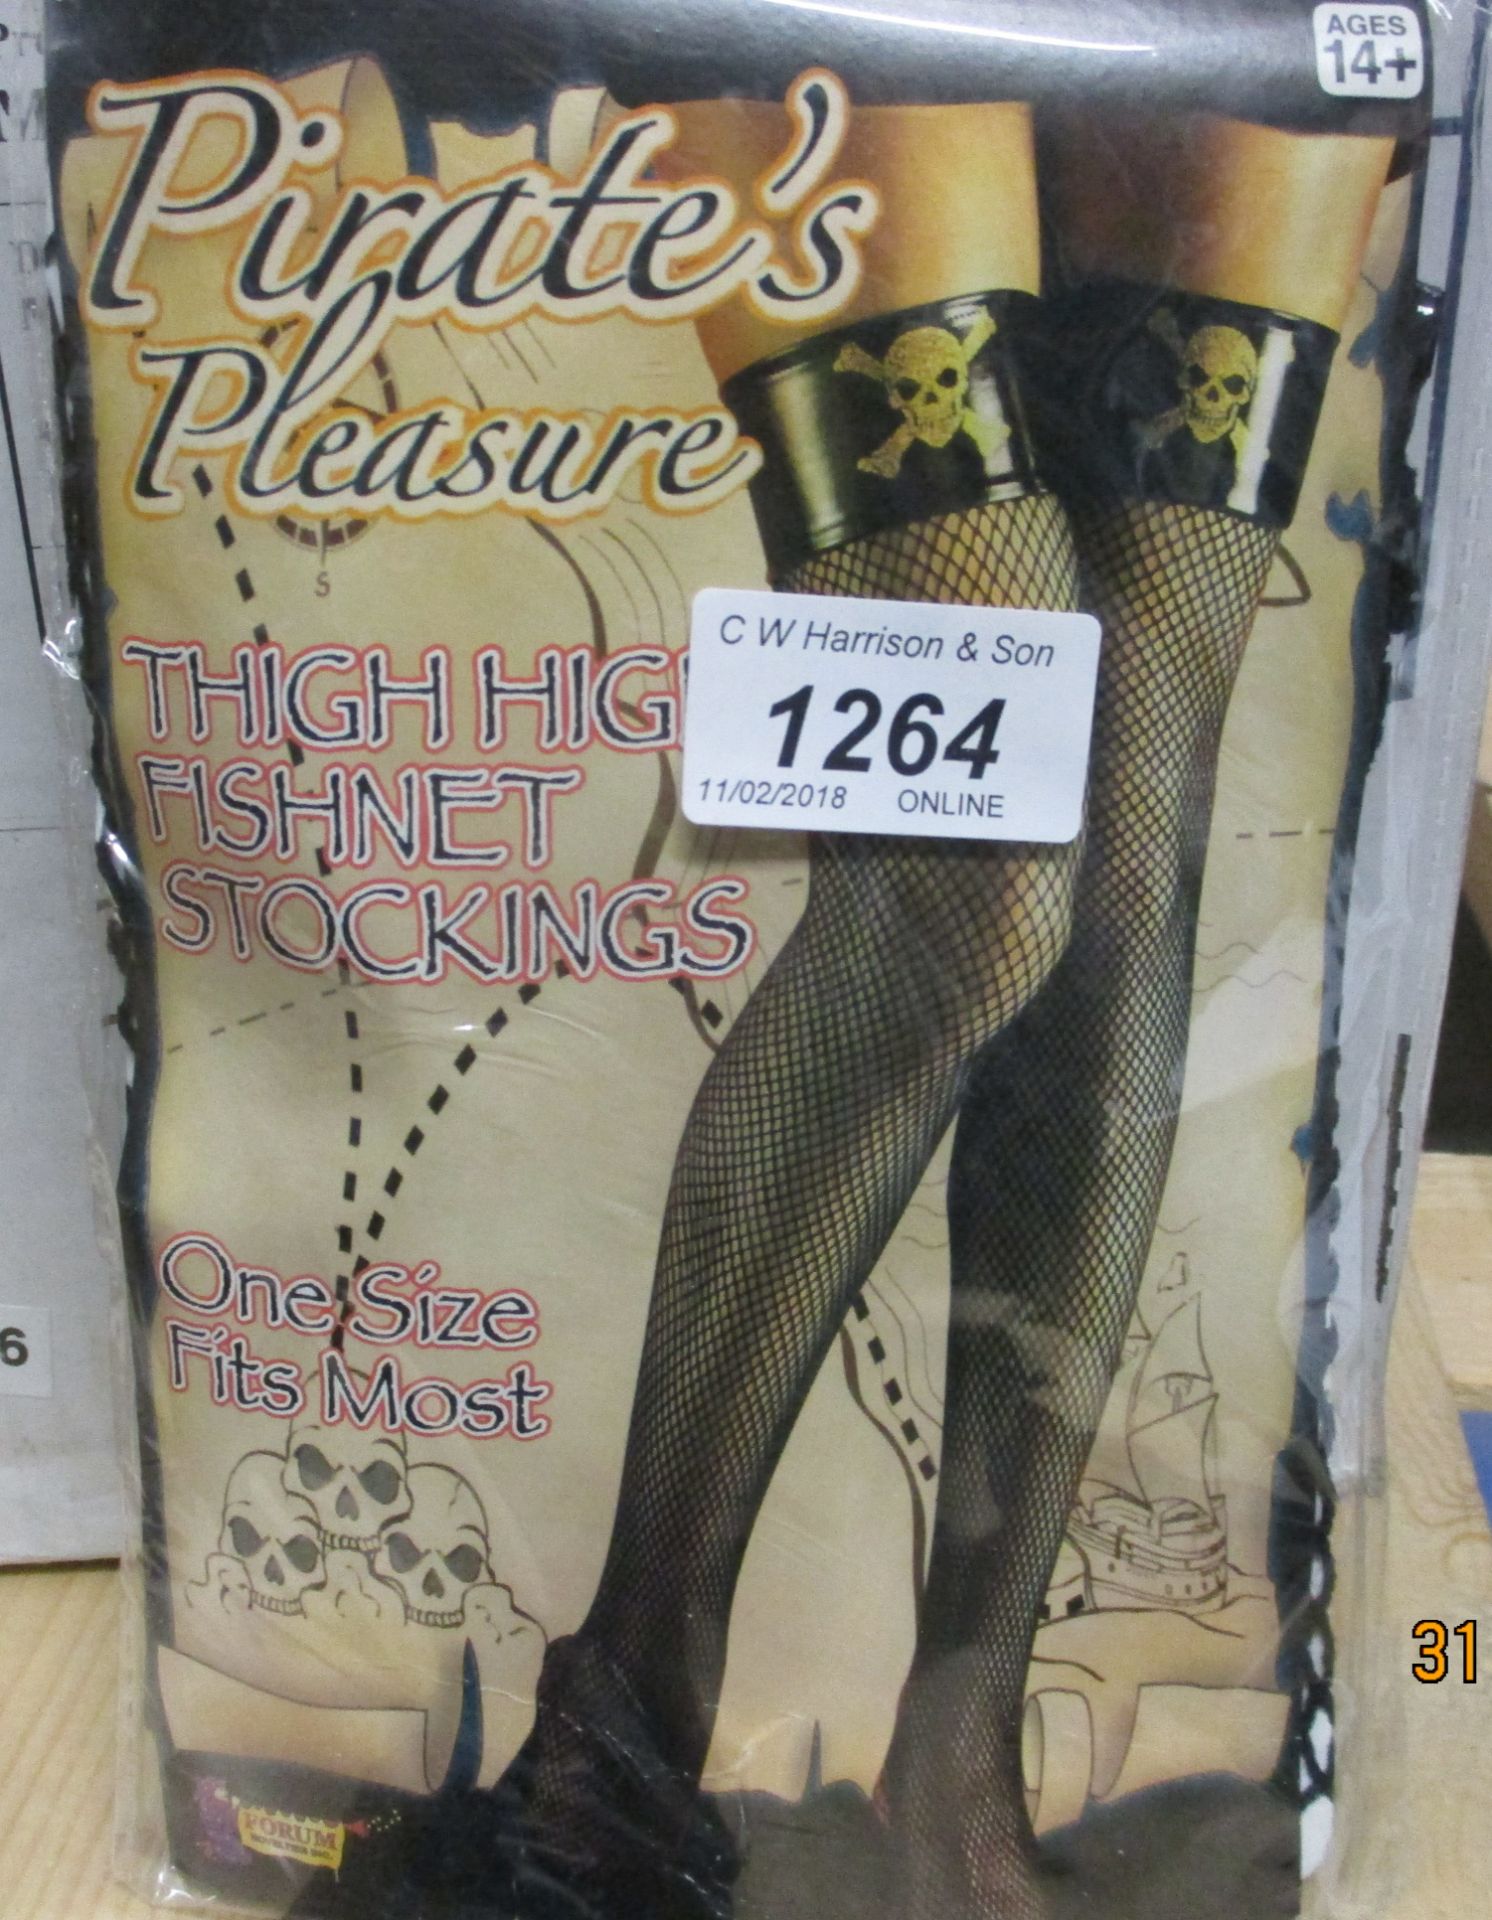 77 x pairs of Forum Novelties Pirates Pleasure thigh high fish net stockings age 14 - box not